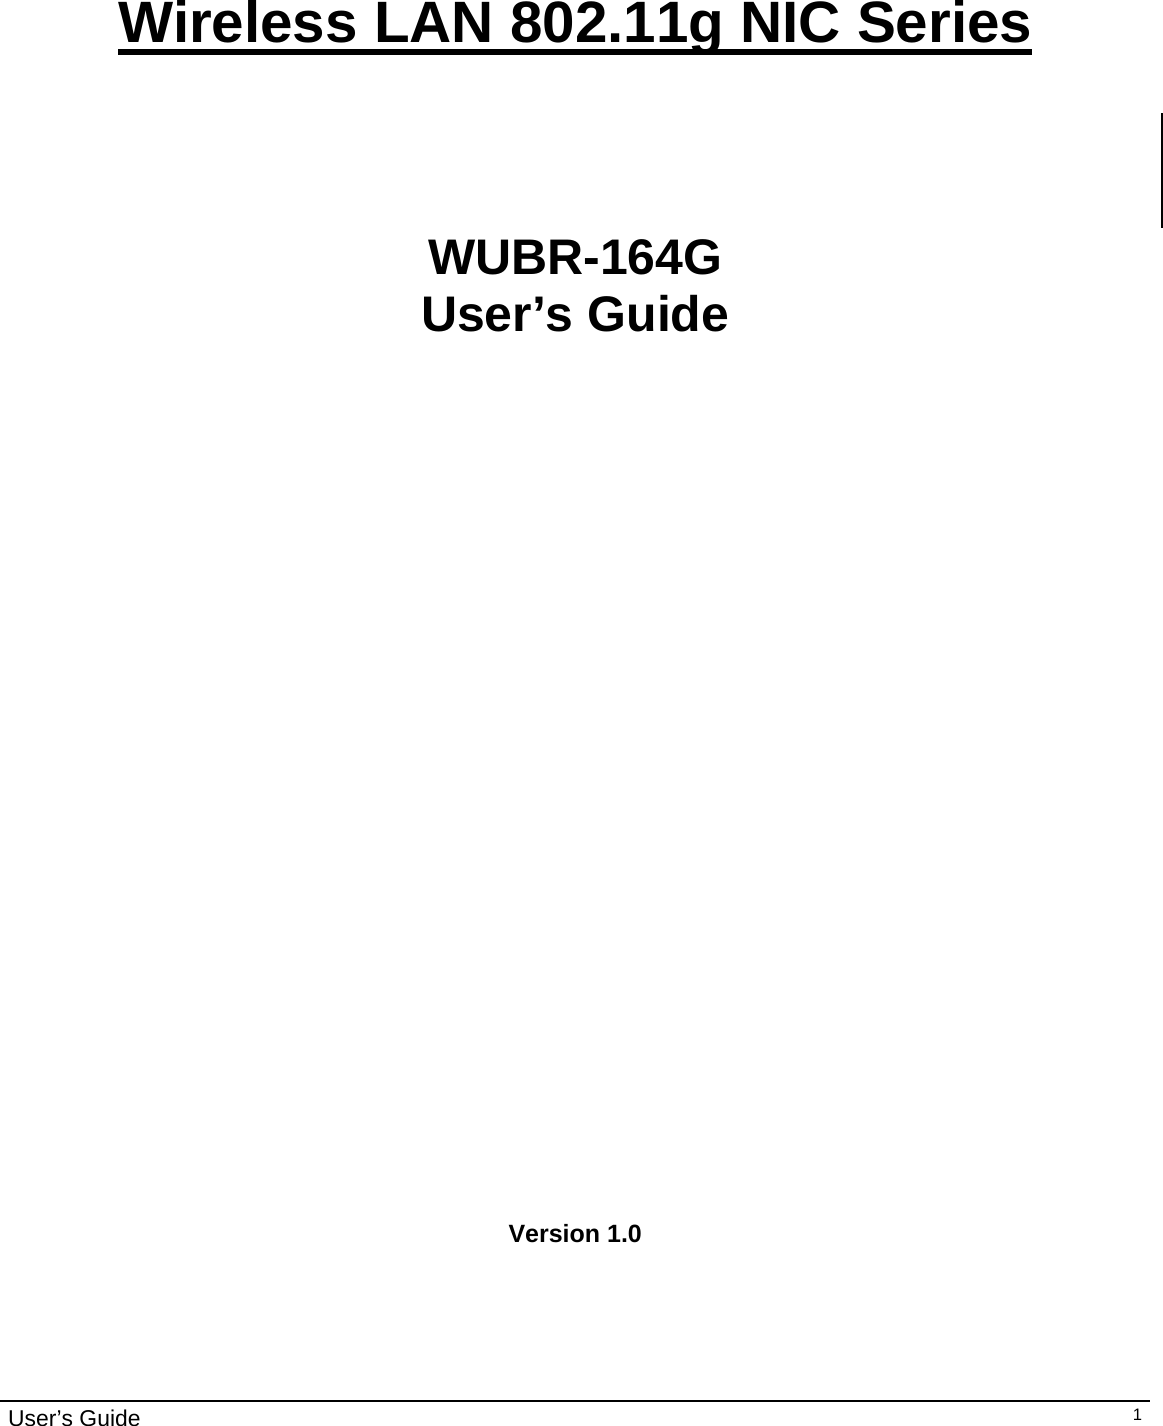                                                                                                                                                                                                                                         User’s Guide   1   Wireless LAN 802.11g NIC Series    WUBR-164G User’s Guide                              Version 1.0   